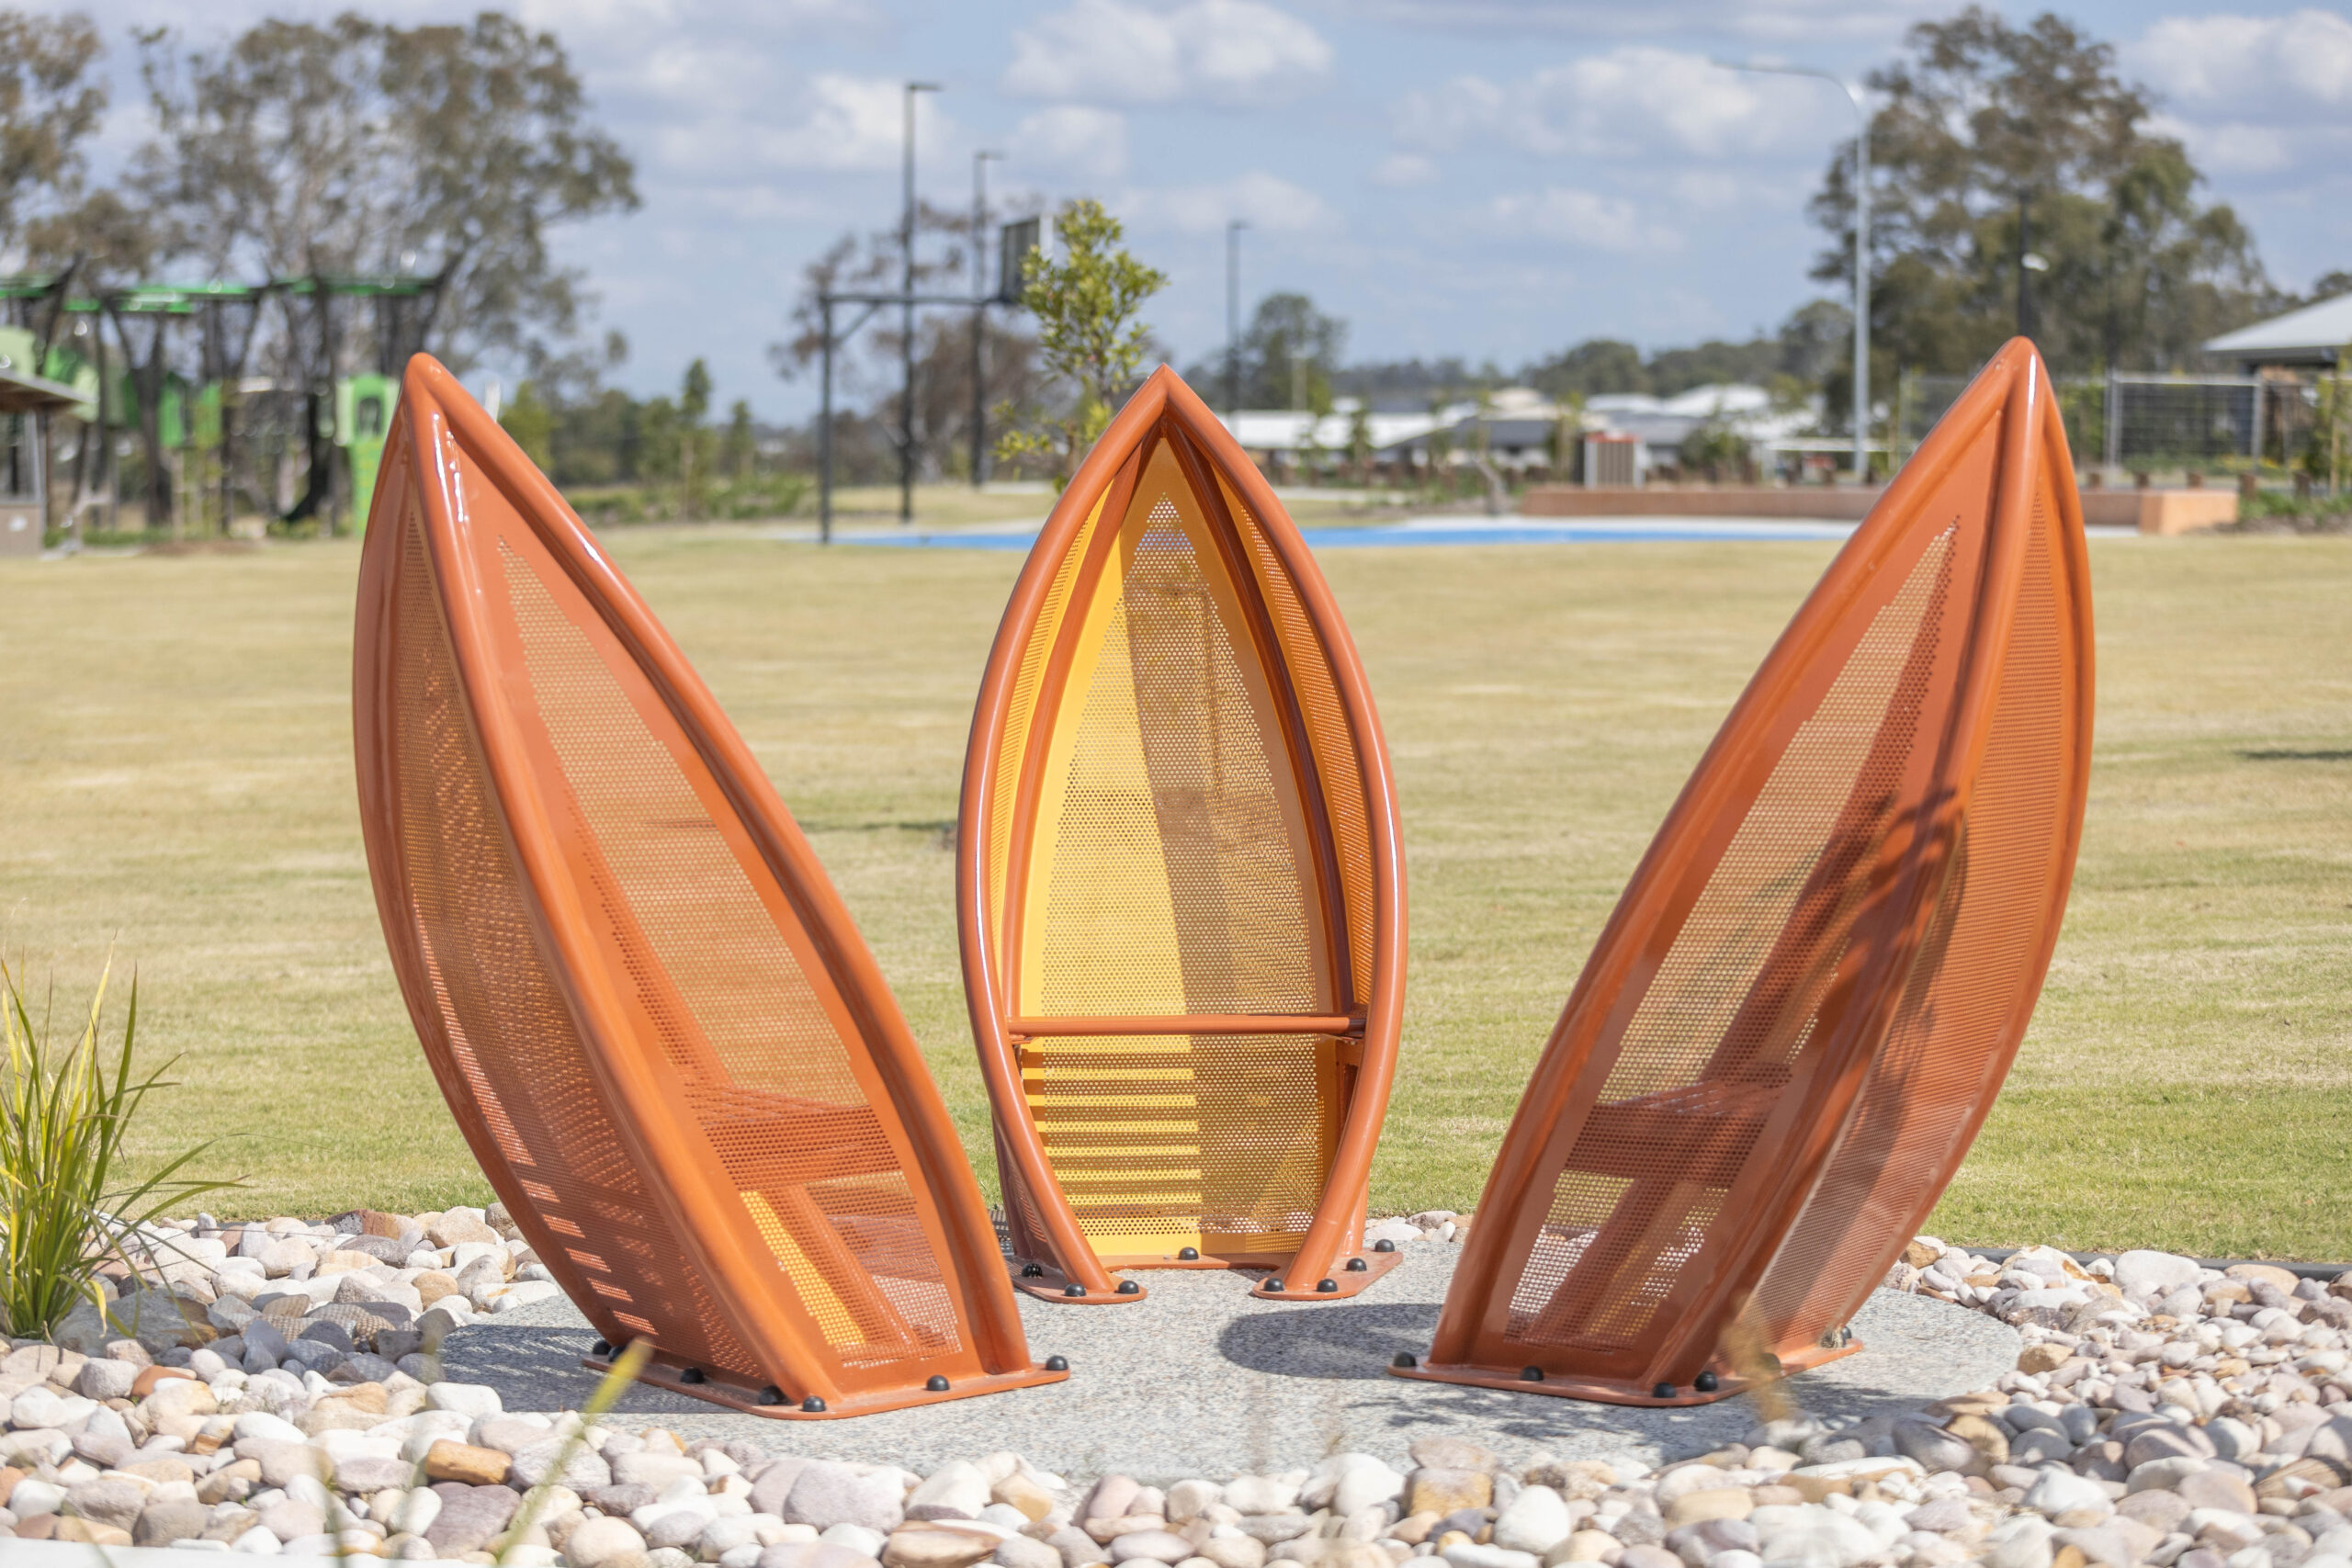 Flindersia Riverside Playground